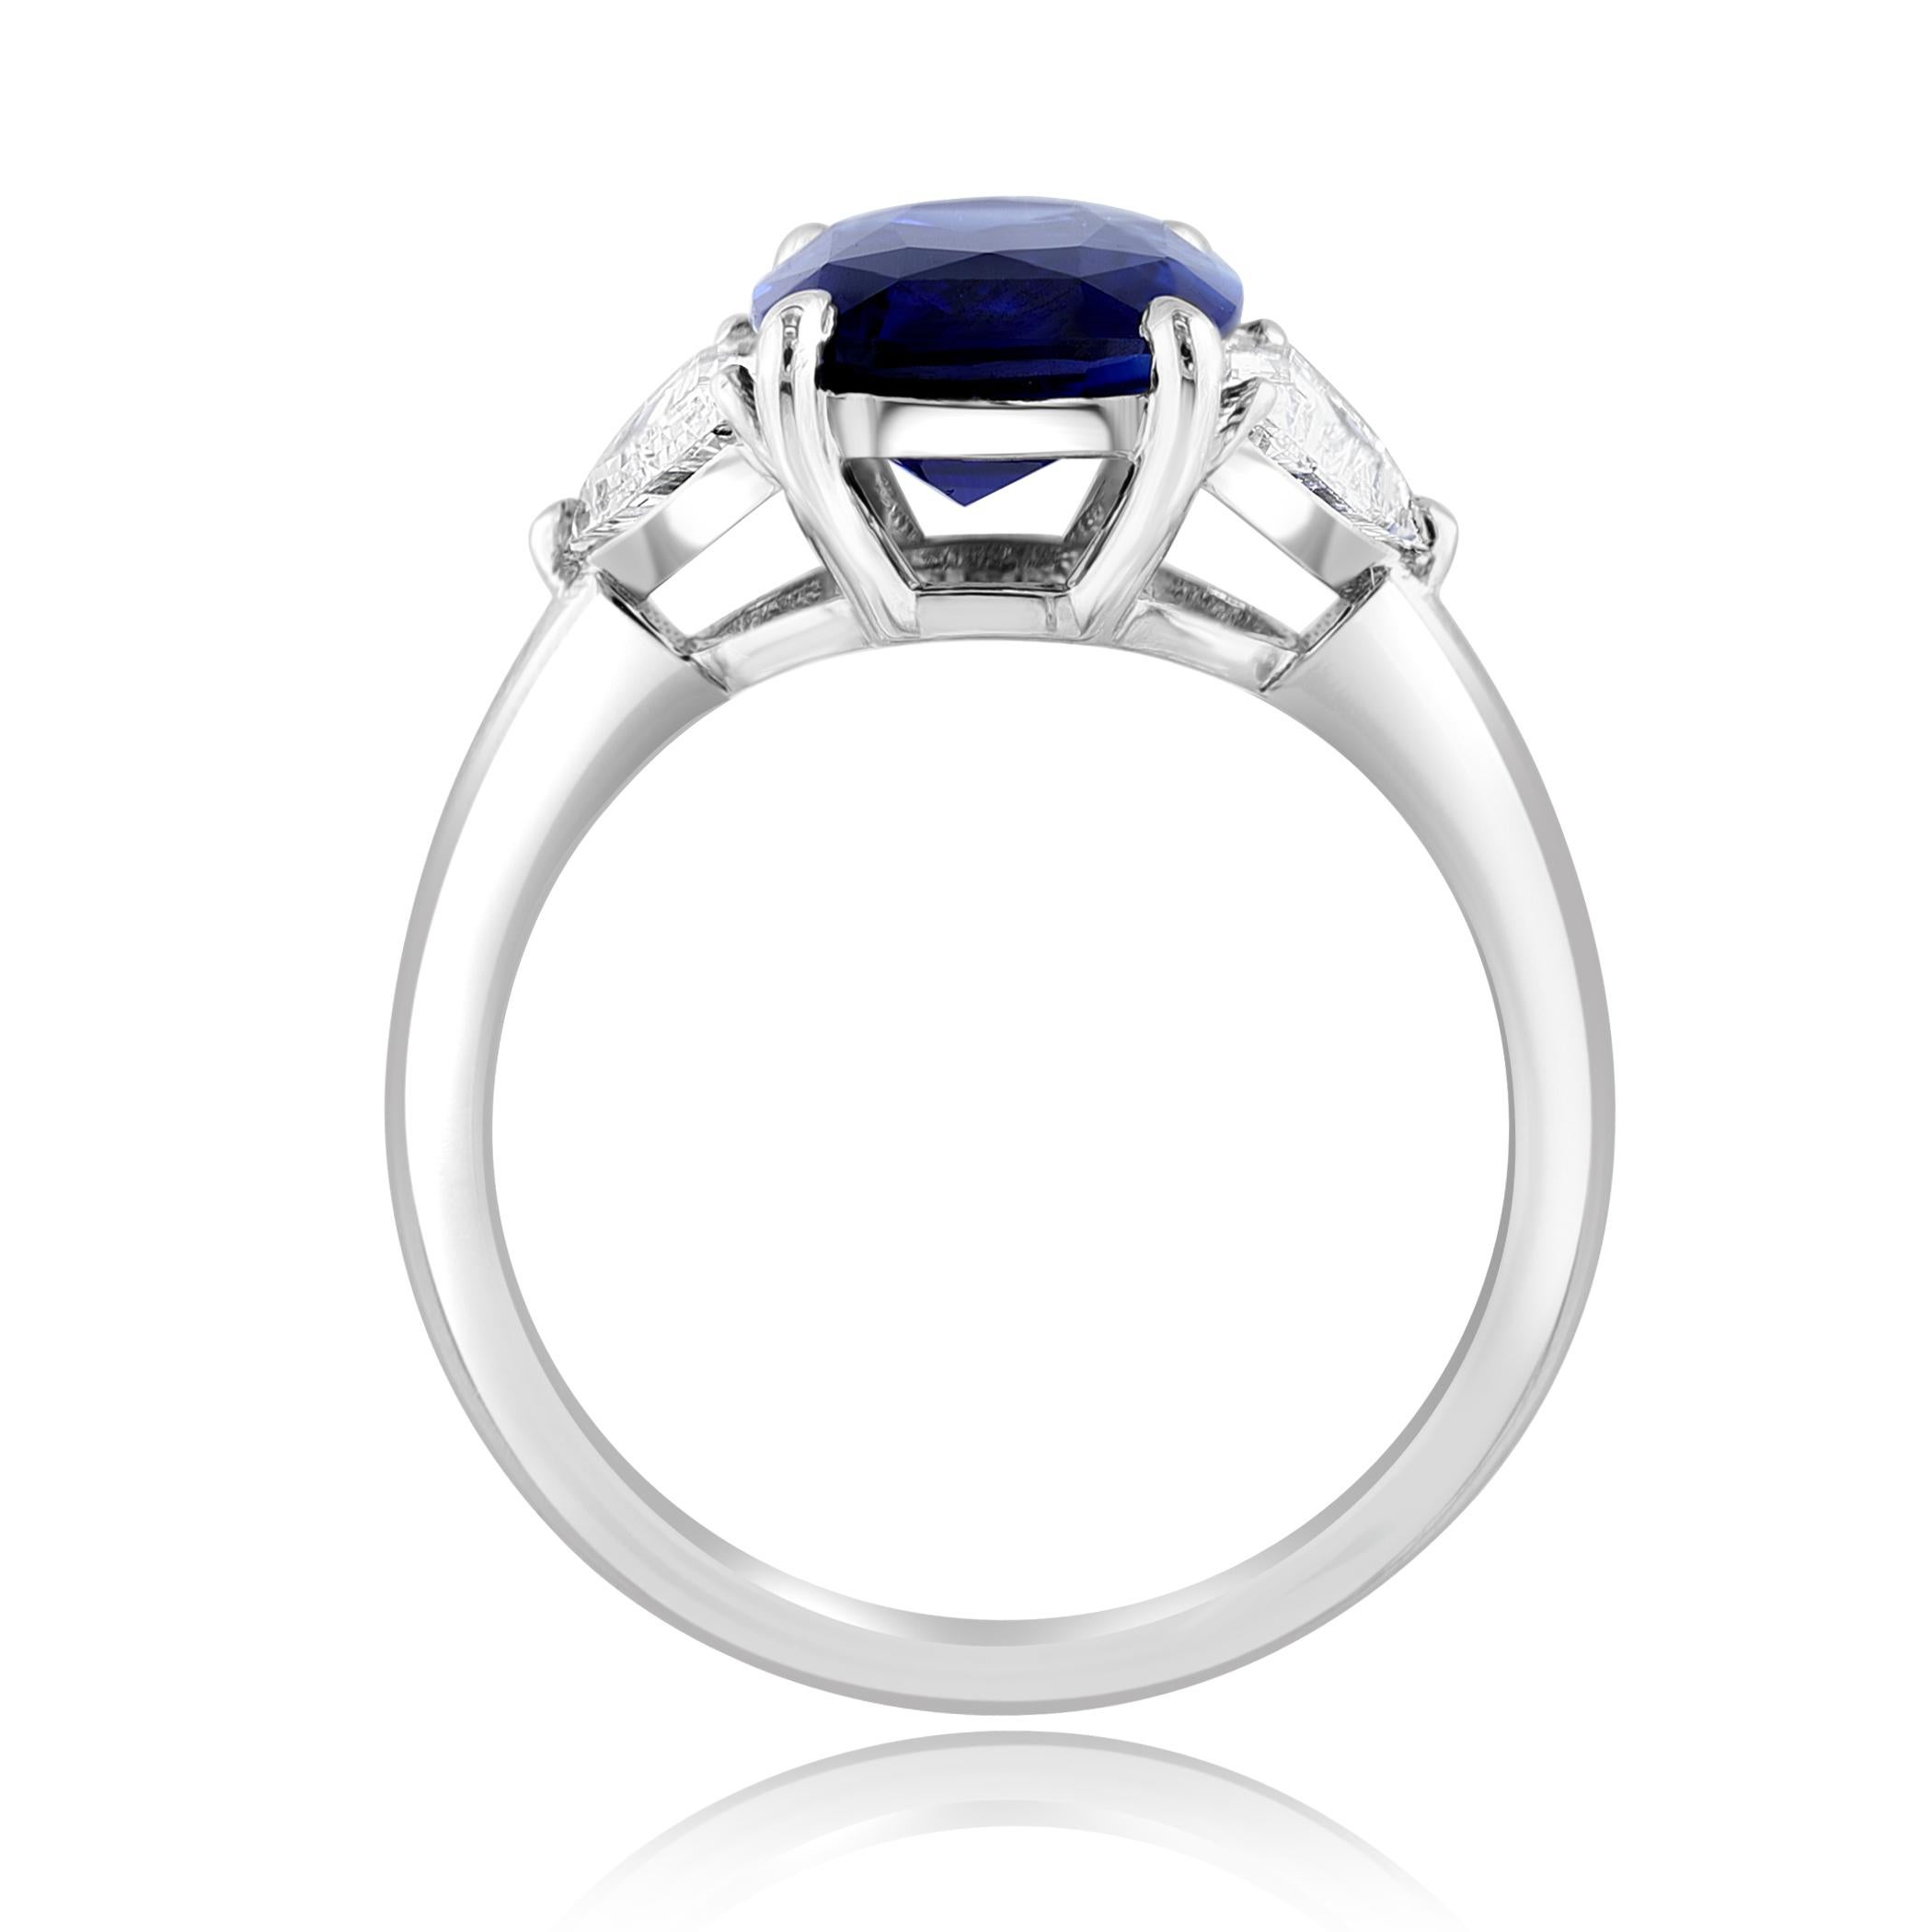 Modern Certified 3.54 Carat Cushion Cut Blue Sapphire Diamond 3-Stone Ring in Platinum For Sale